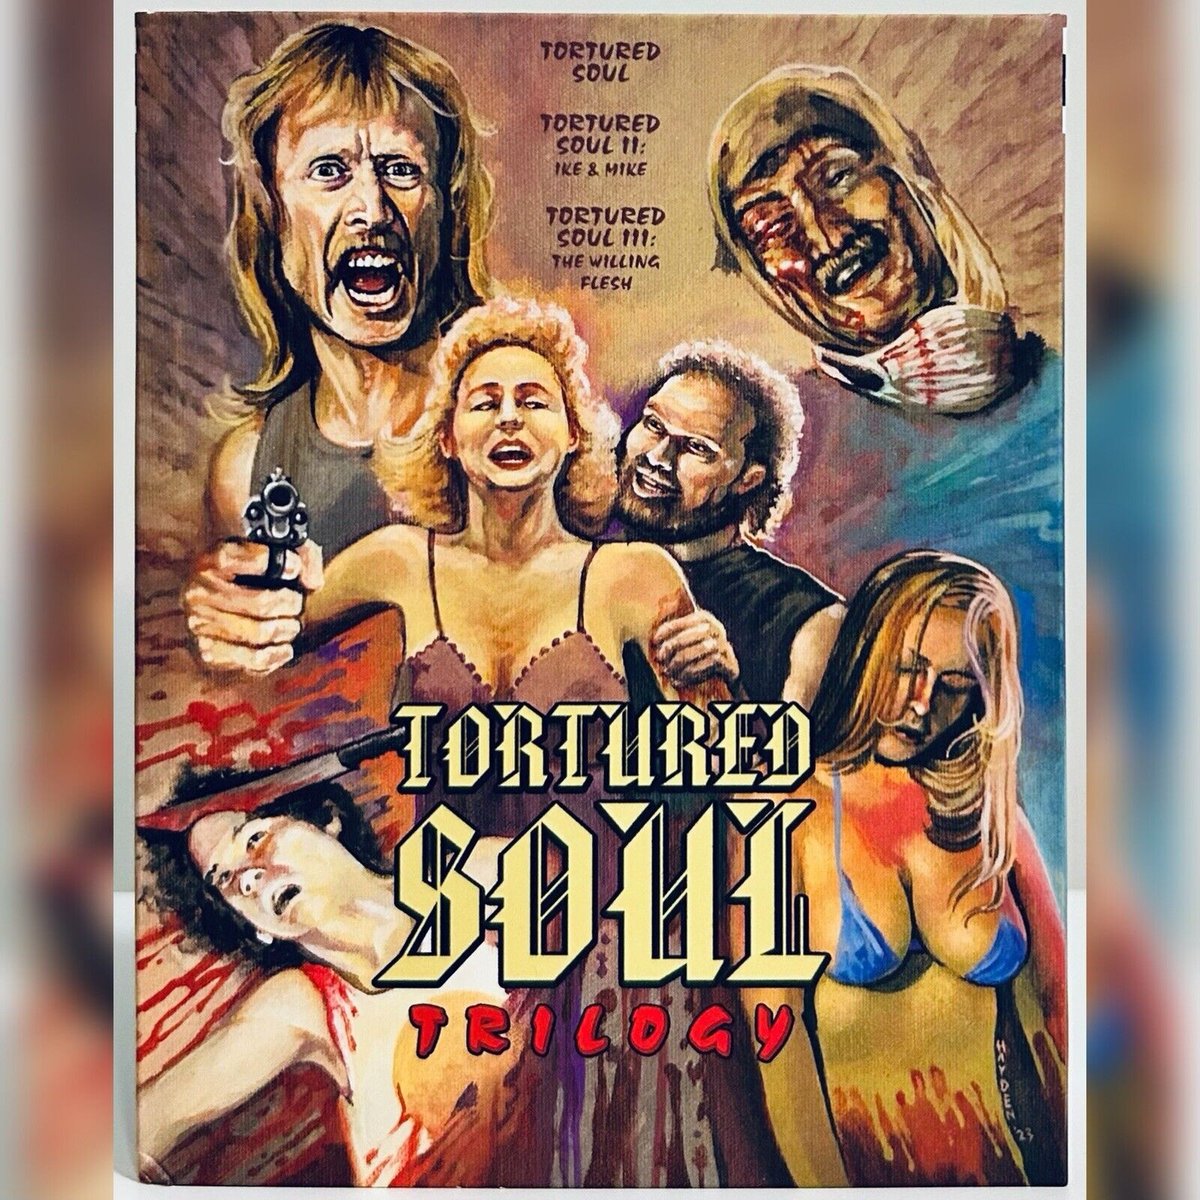 #NewArrival! Tortured Soul Trilogy (Blu-ray) Saturn's Core, 2-Disc Set w/ OOP Slipcover SOV rareflicksplus.com/product-page/t… #checkitout #Bluray #Blurays #PhysicalMedia #BluRayStore #Horror #HorrorMovie #HorrorCommunity #SOV #ShotOnVideo #TorturedSoul #SaturnsCore #OOP #Slipcover